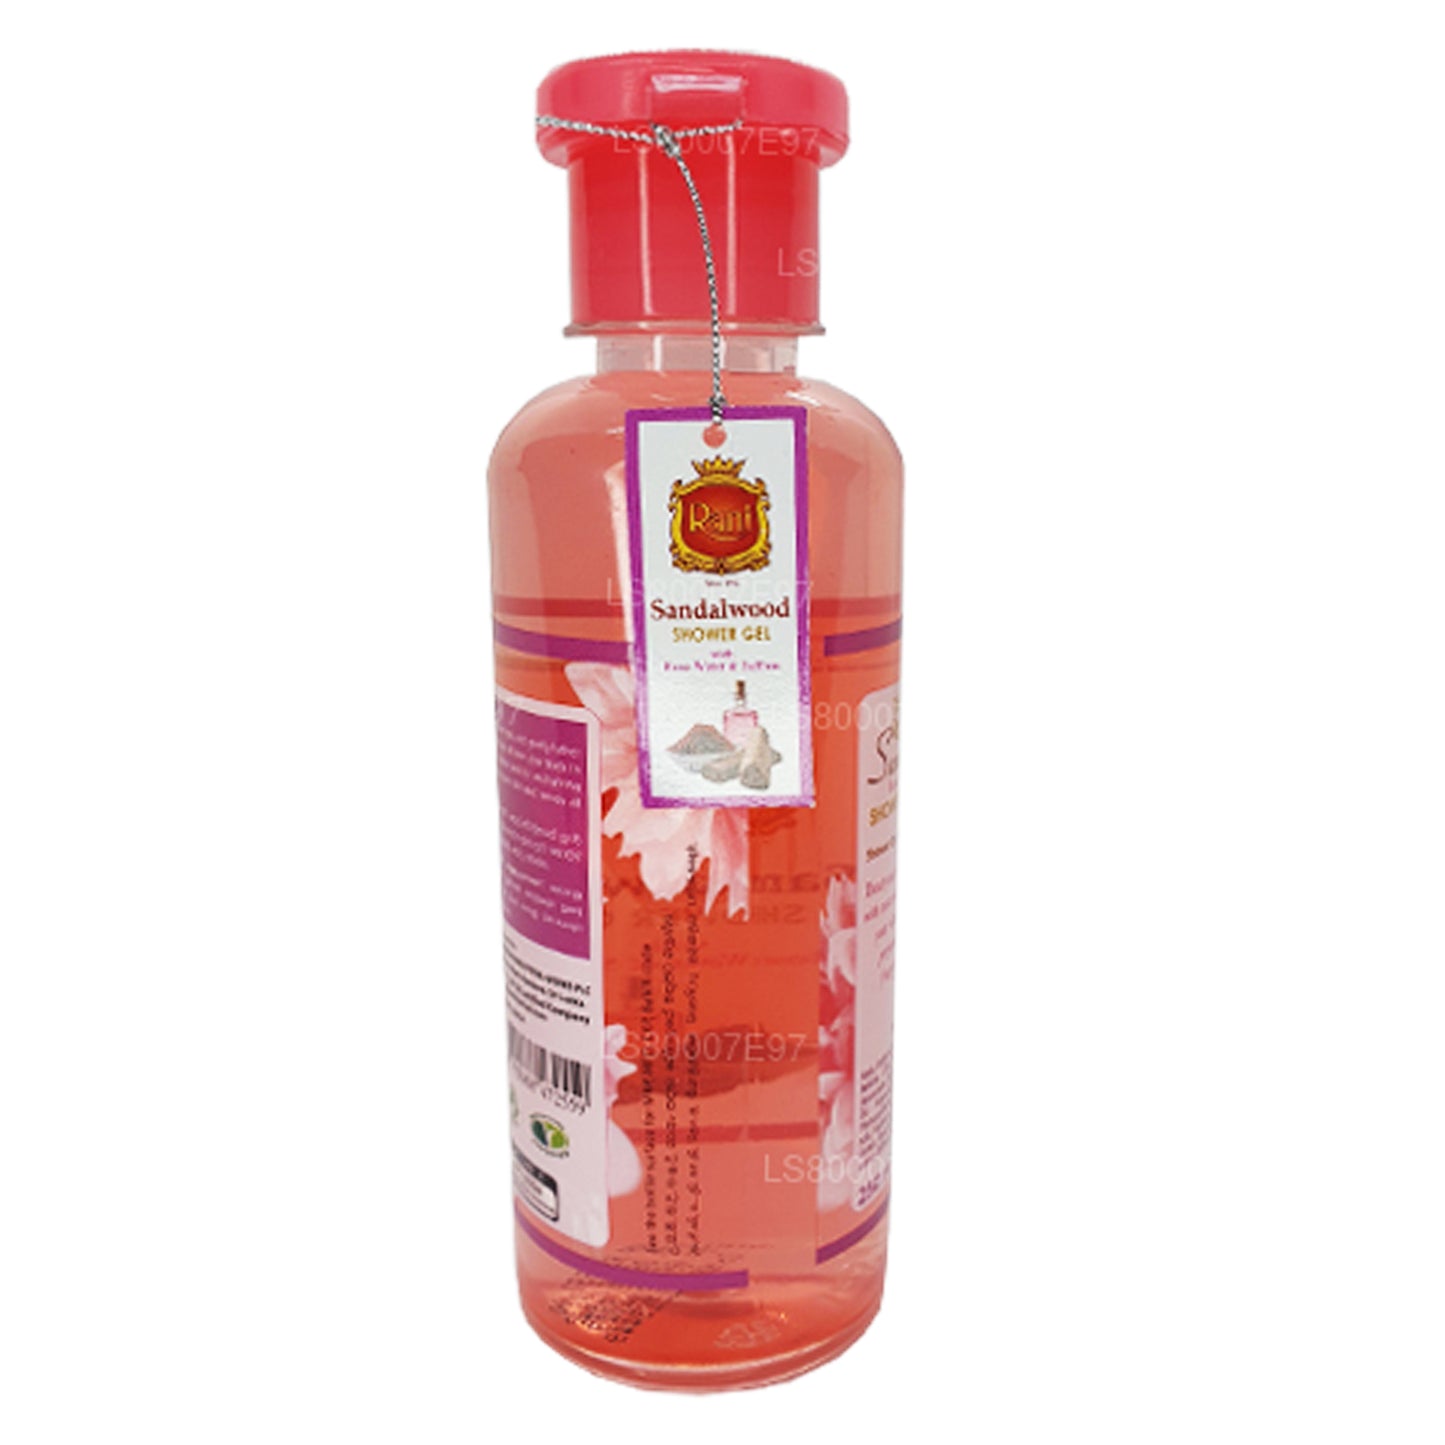 Gel de ducha Swadeshi Rani Sandalwood, agua de rosas y azafrán (250 ml)